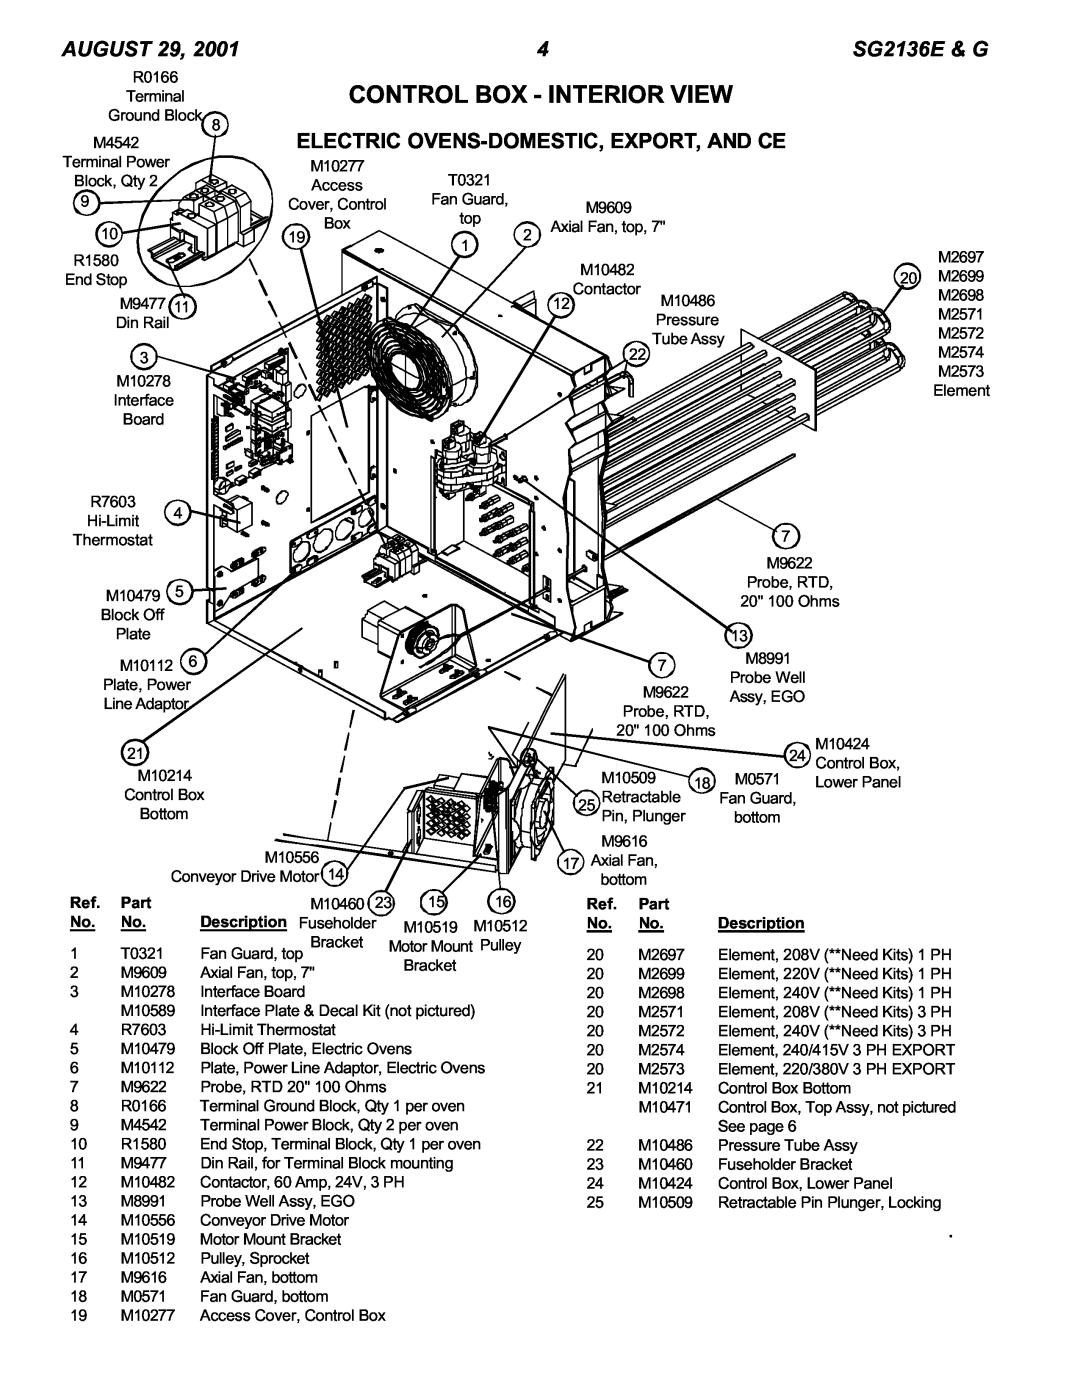 Blodgett SG2136 E & G manual Electric Ovens-Domestic, Export, And Ce, Part, Description Fuseholder 